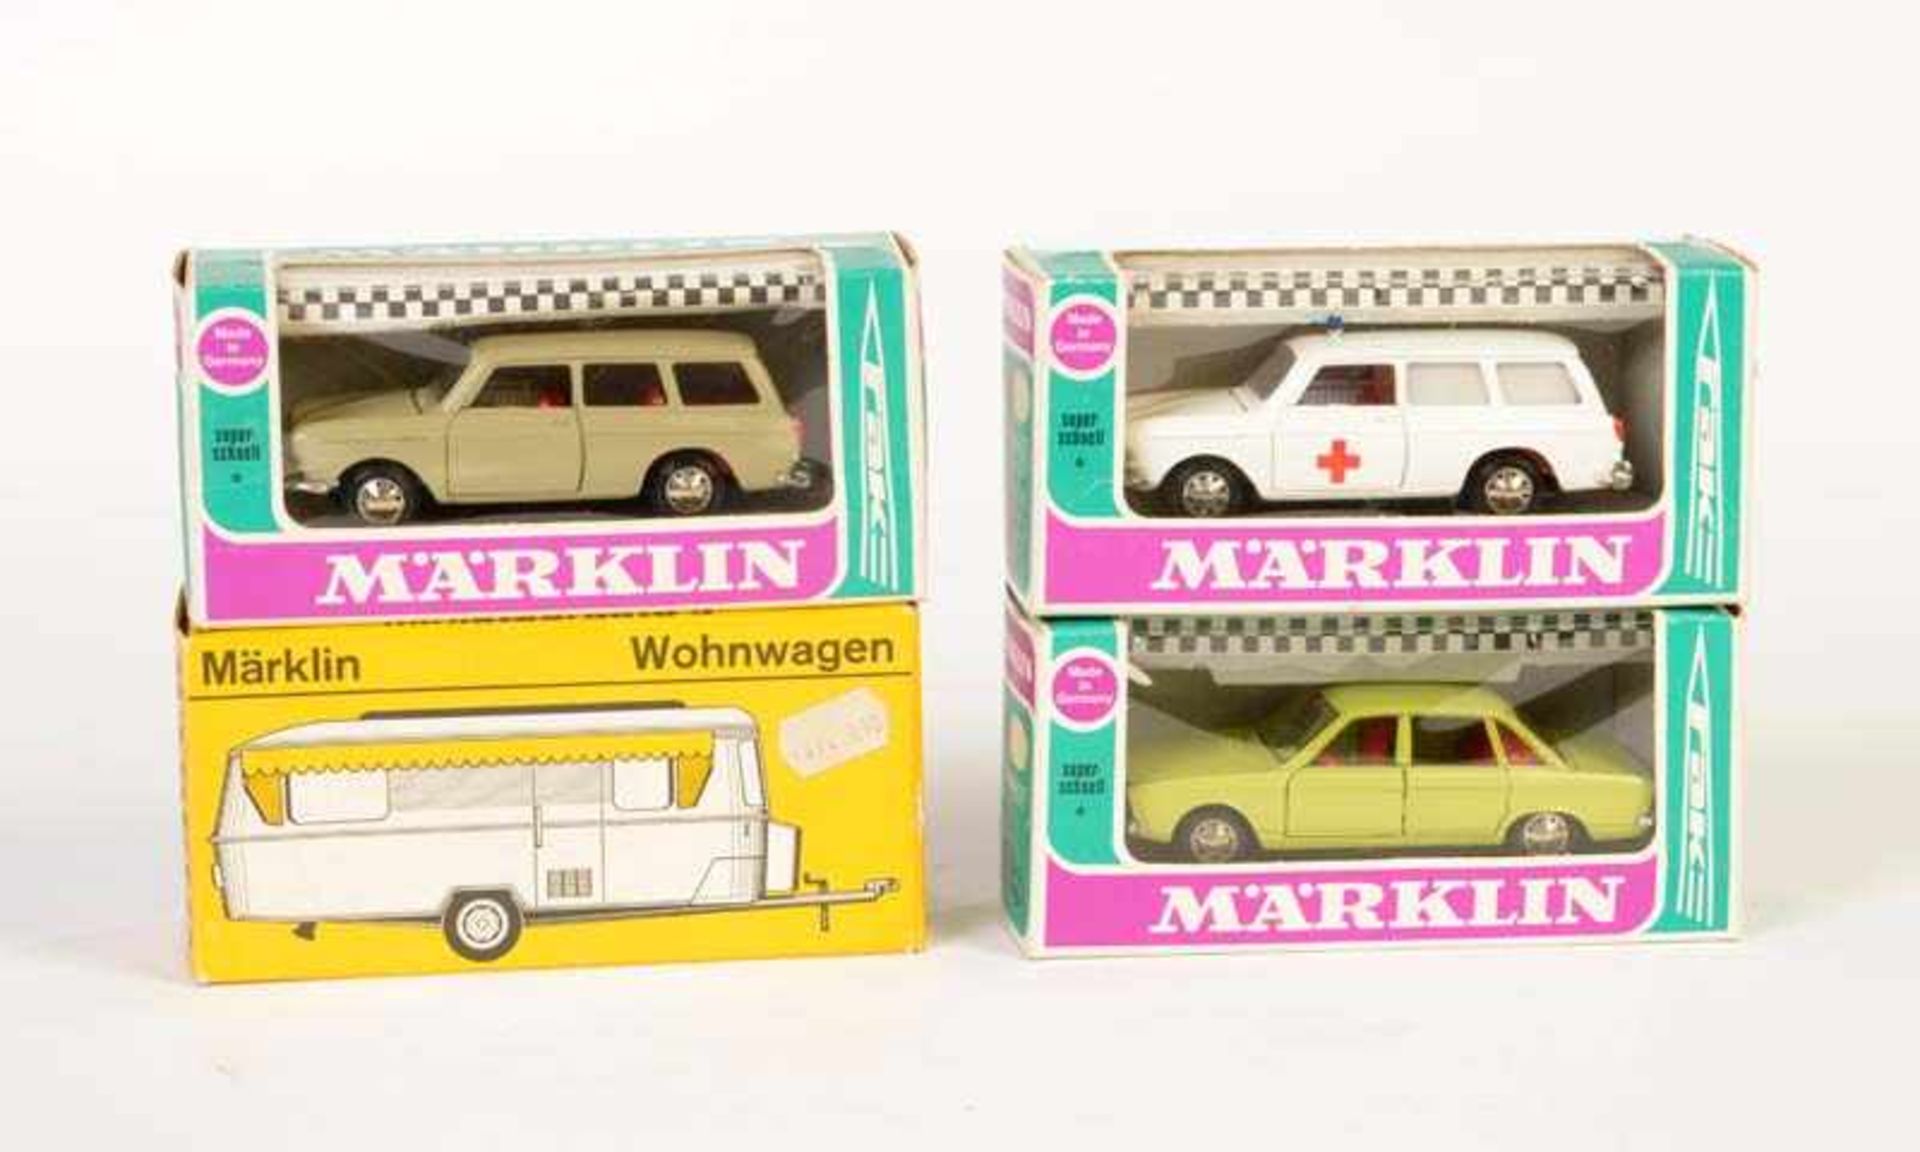 Marklin, 3x VW + Wohnwagen, W.-Germany, 1:43, Druckguss, Okt Z 1-, Z 1 Marklin, 3x VW + Caravan,